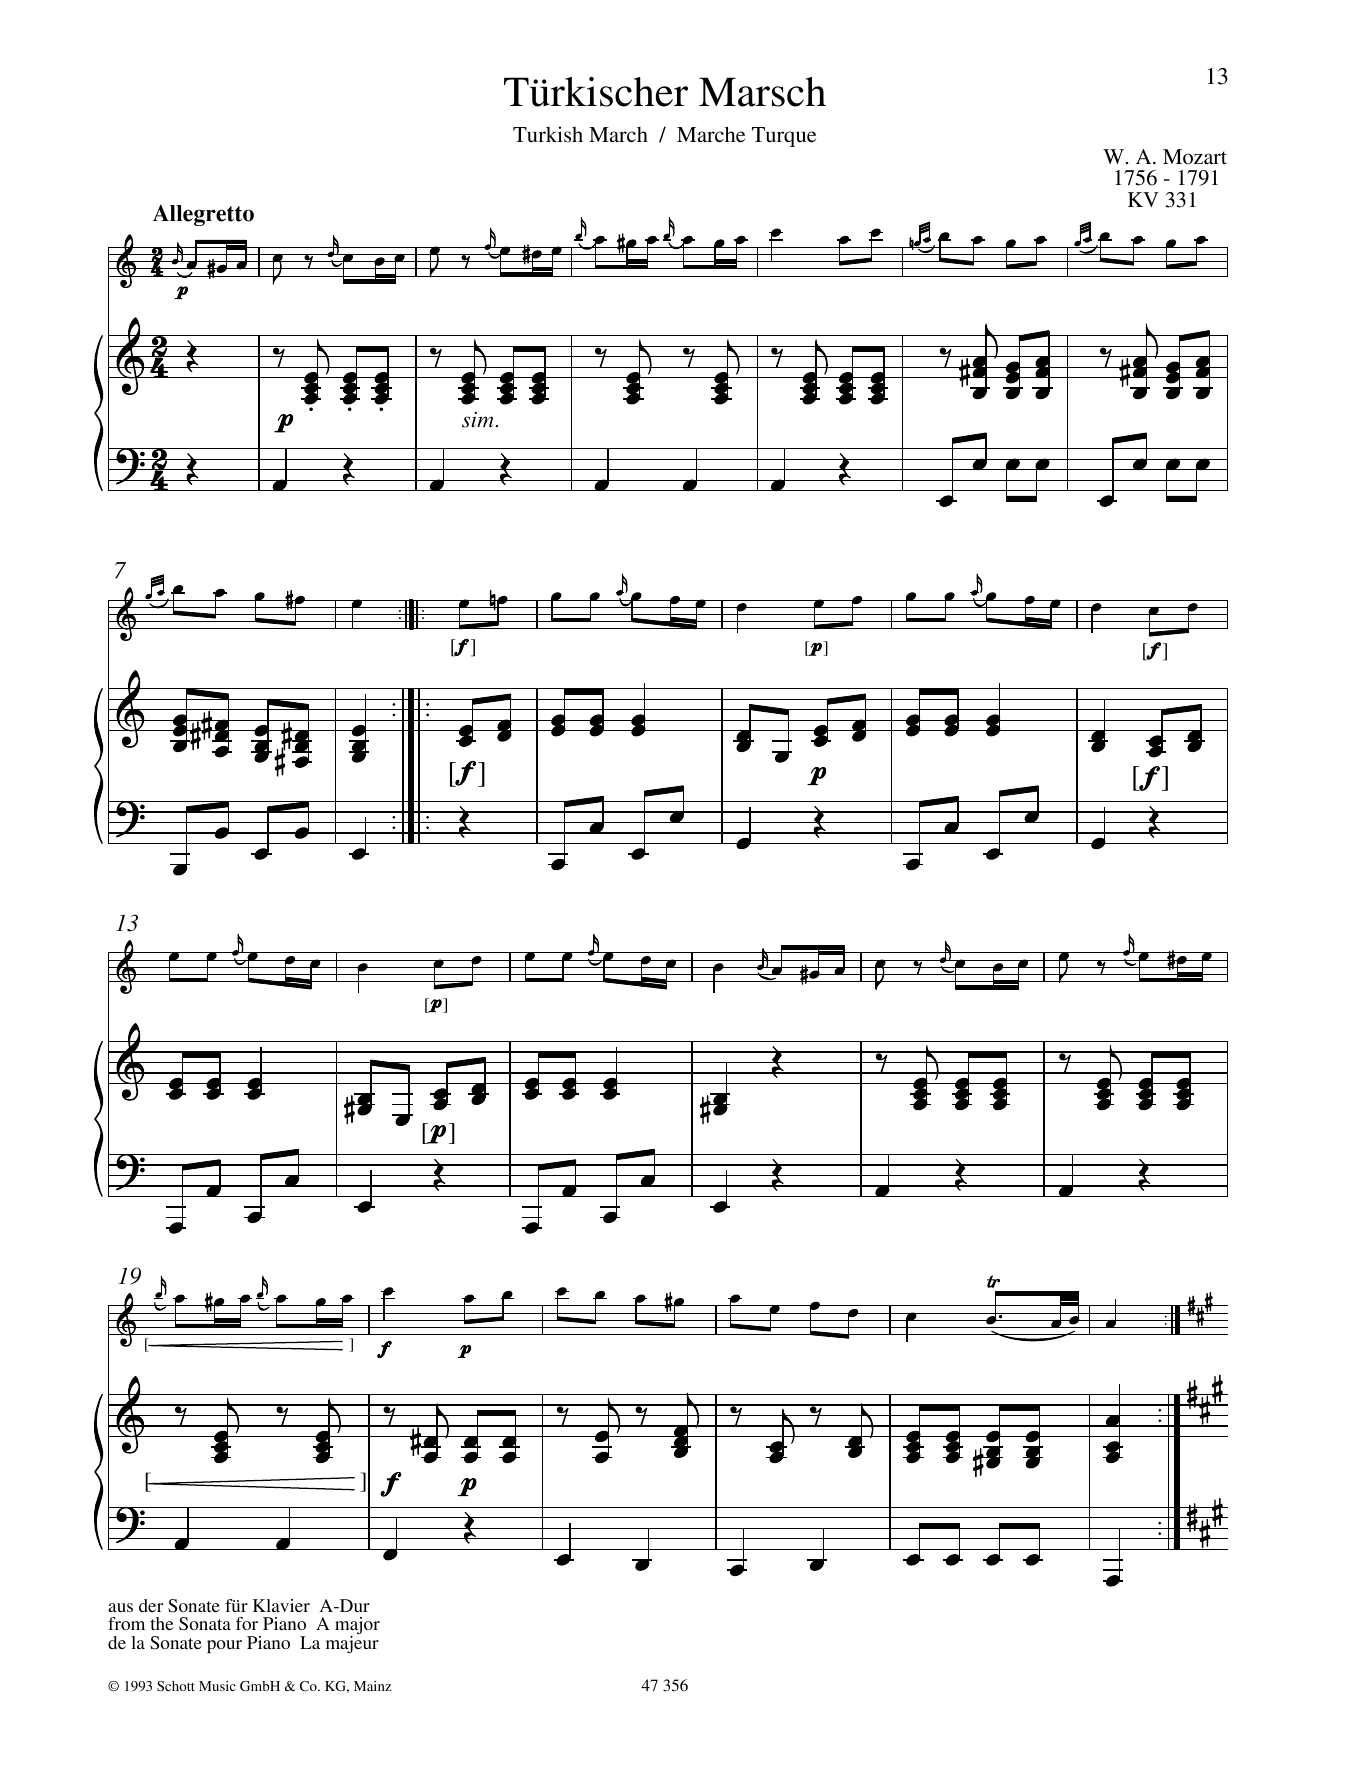 Download Wolfgang Amadeus Mozart Turkischer Marsch Sheet Music